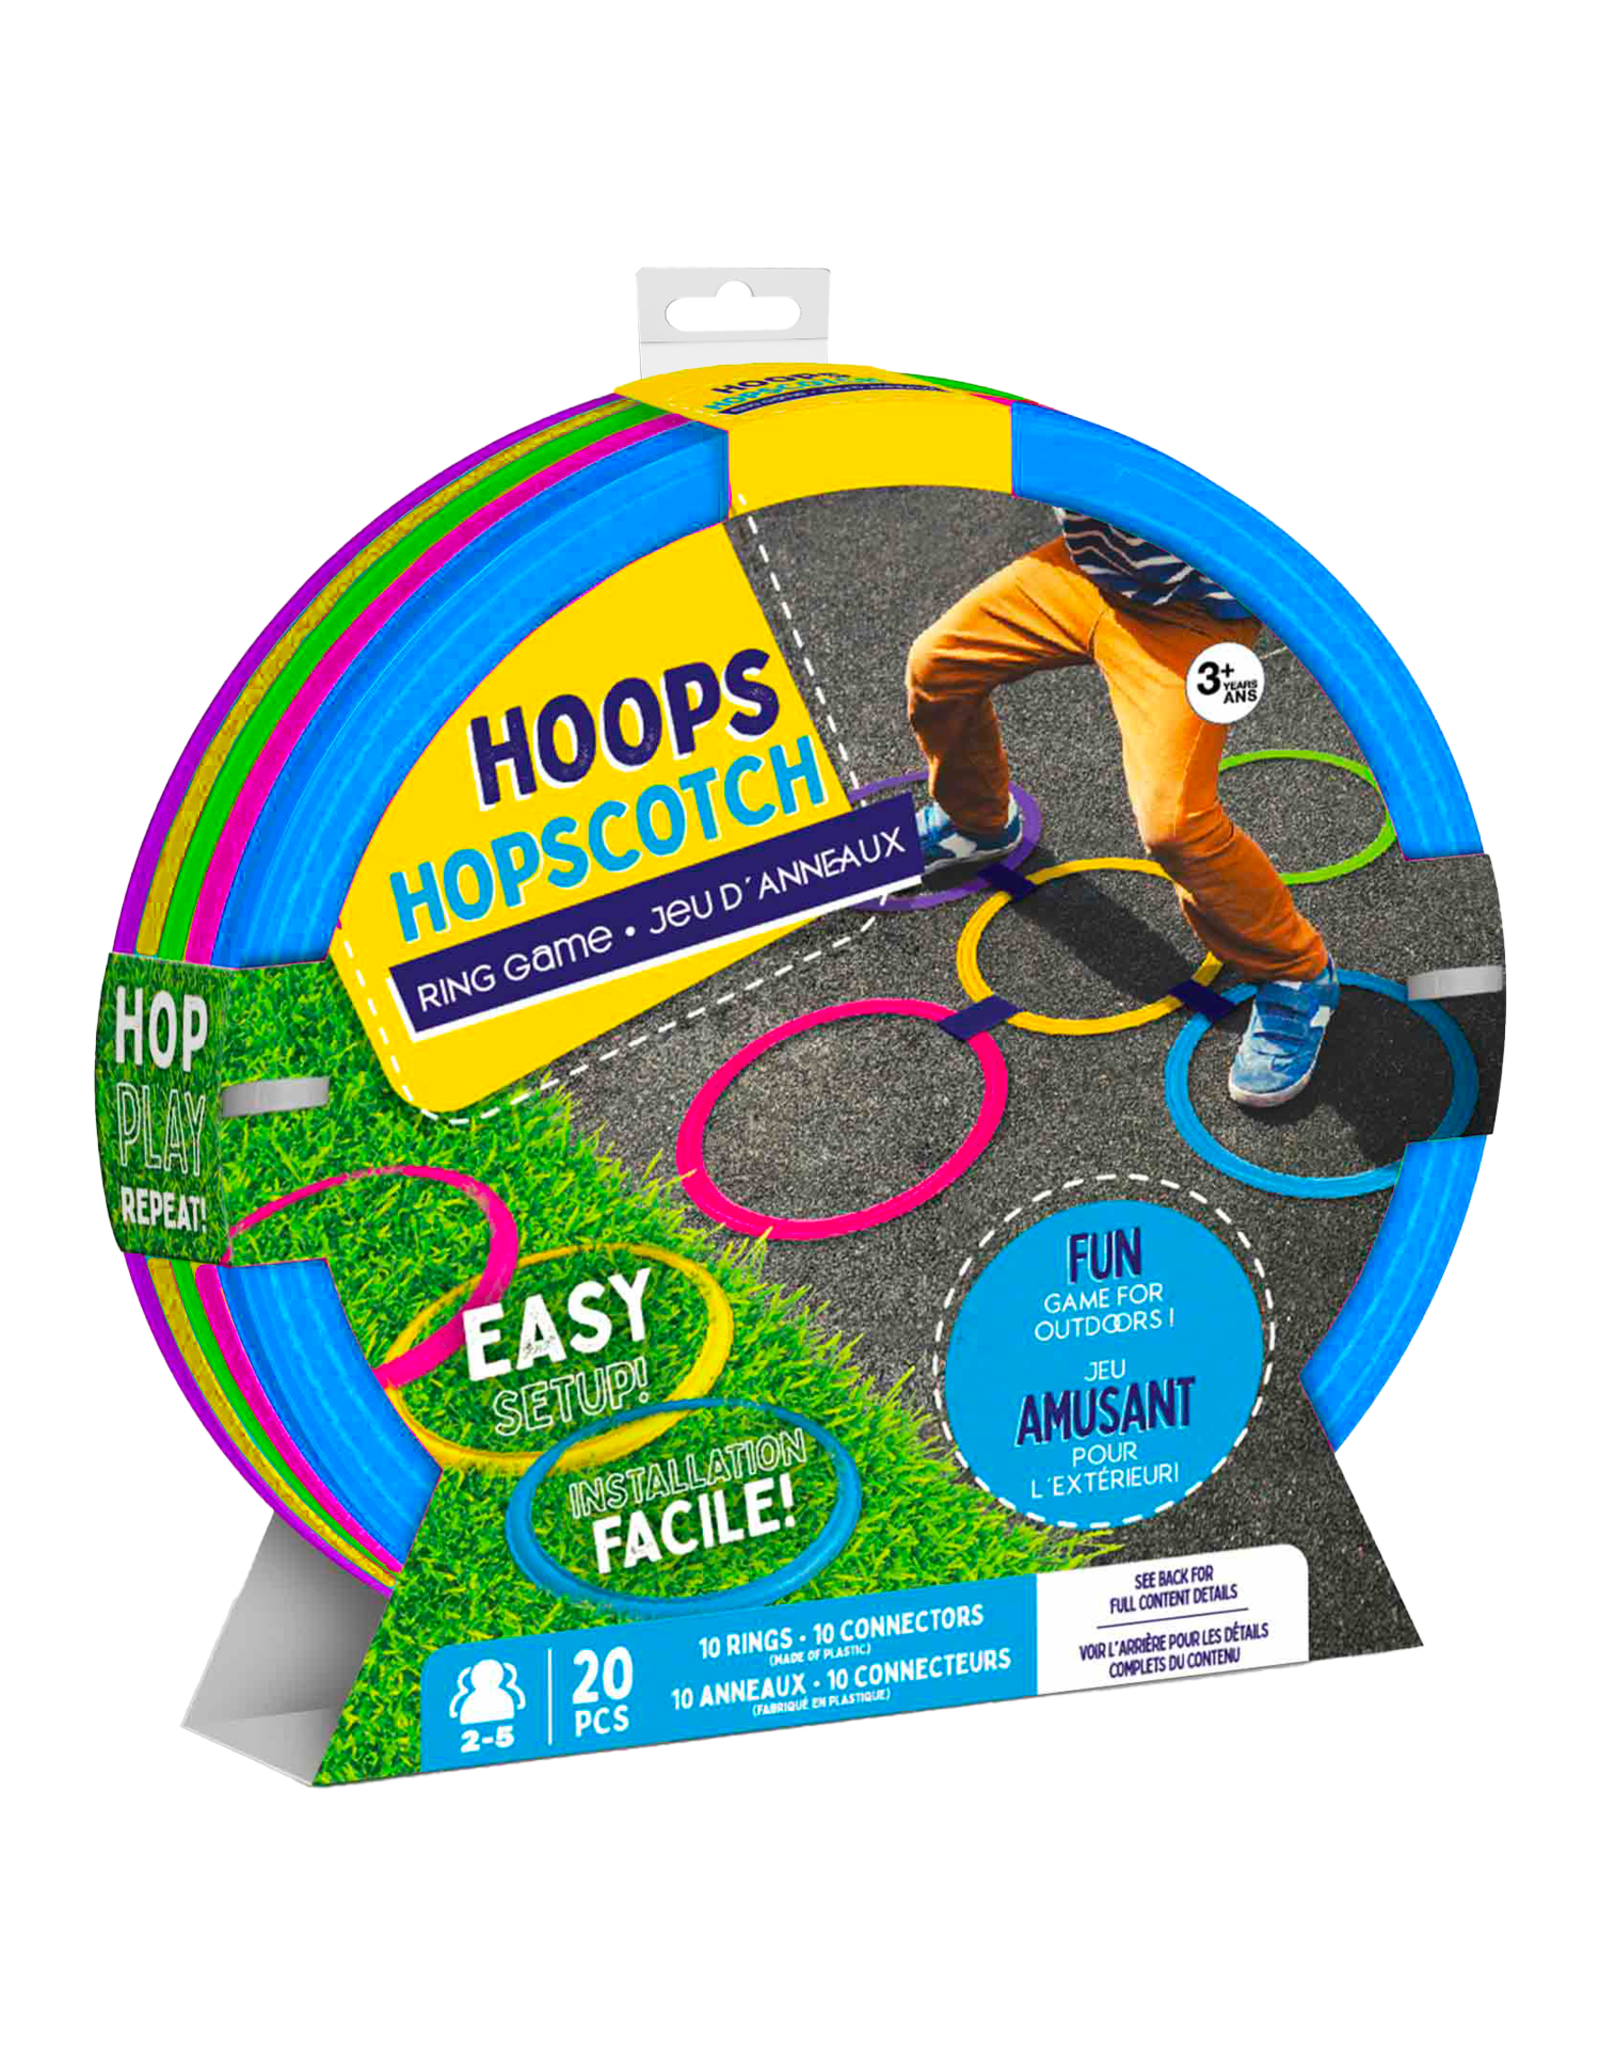 Ricochet Hoops Hopscotch - Ring game